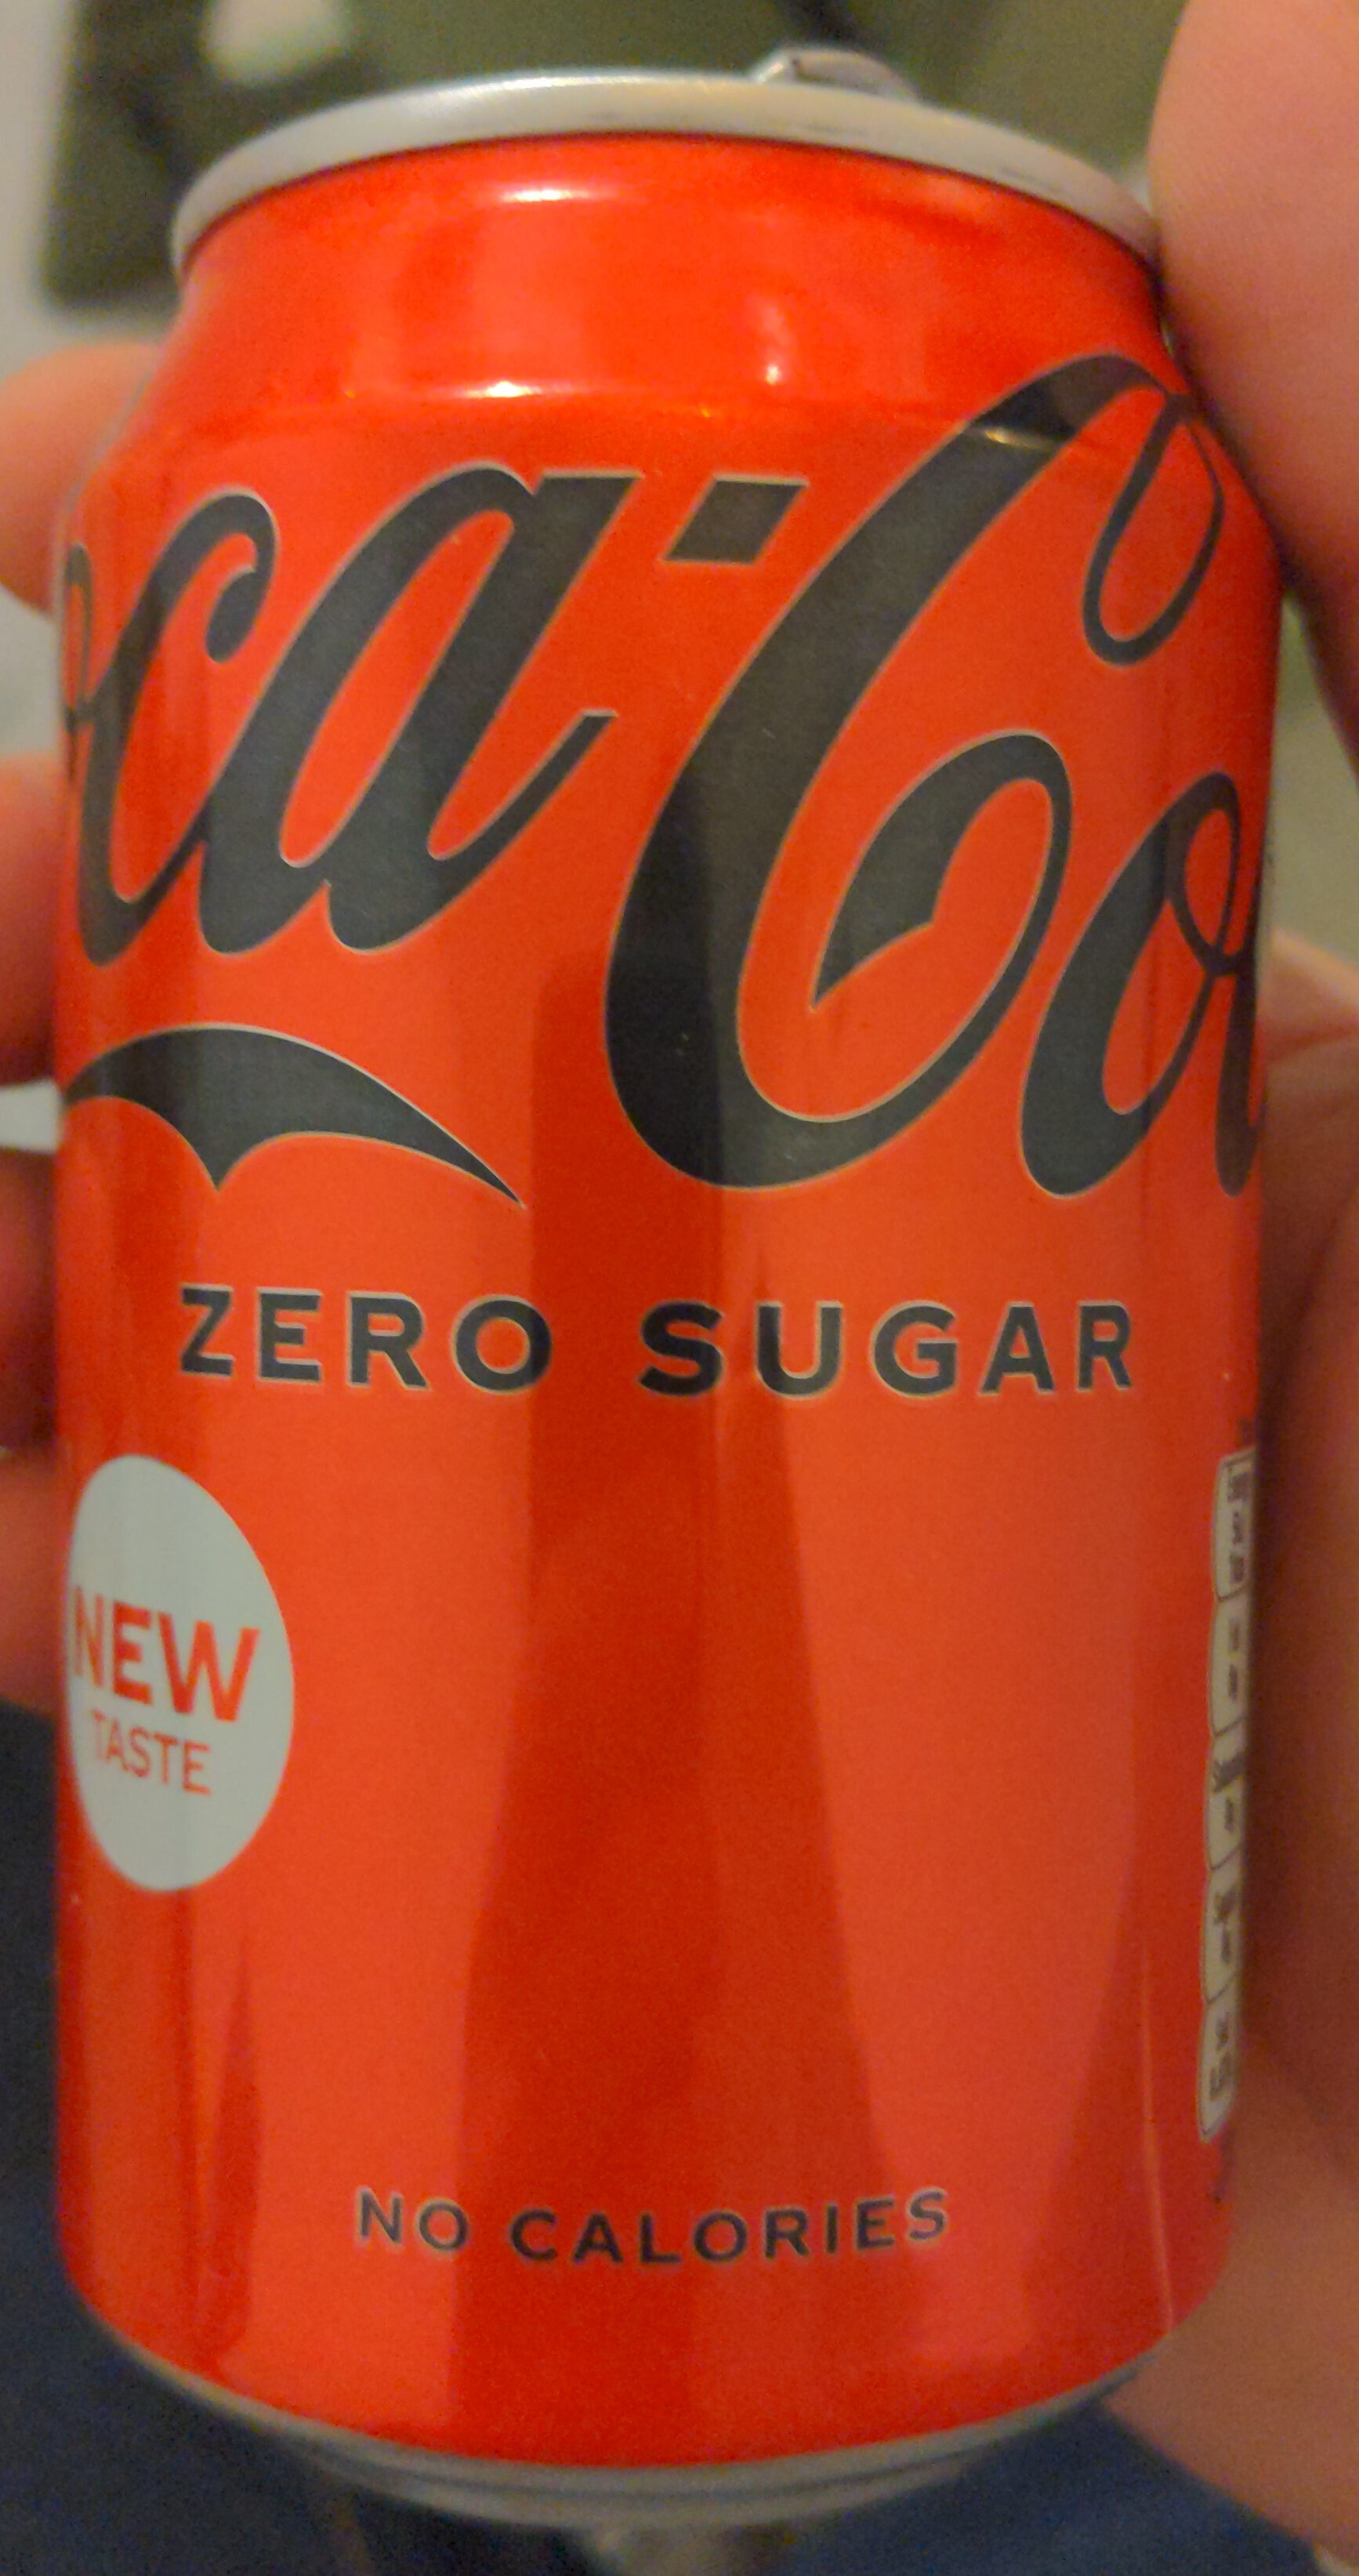 Coca cola 330 zero - Produkt - en